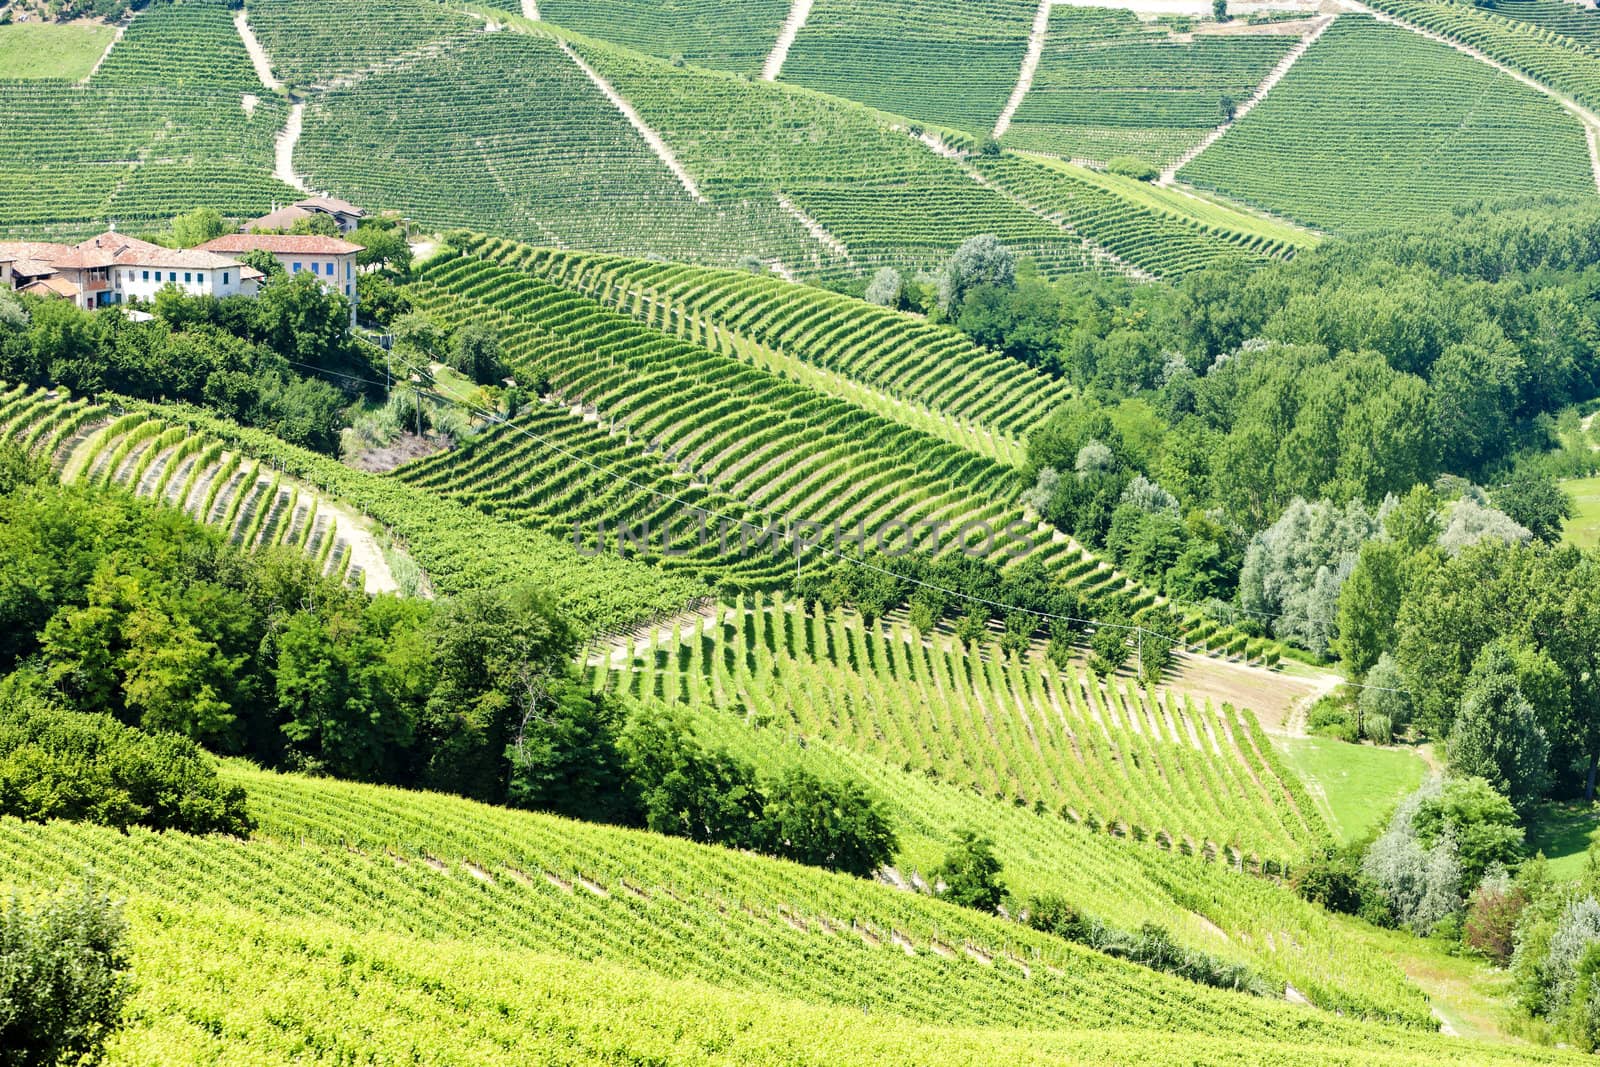 vineyars near Barbaresco, Piedmont, Italy by phbcz